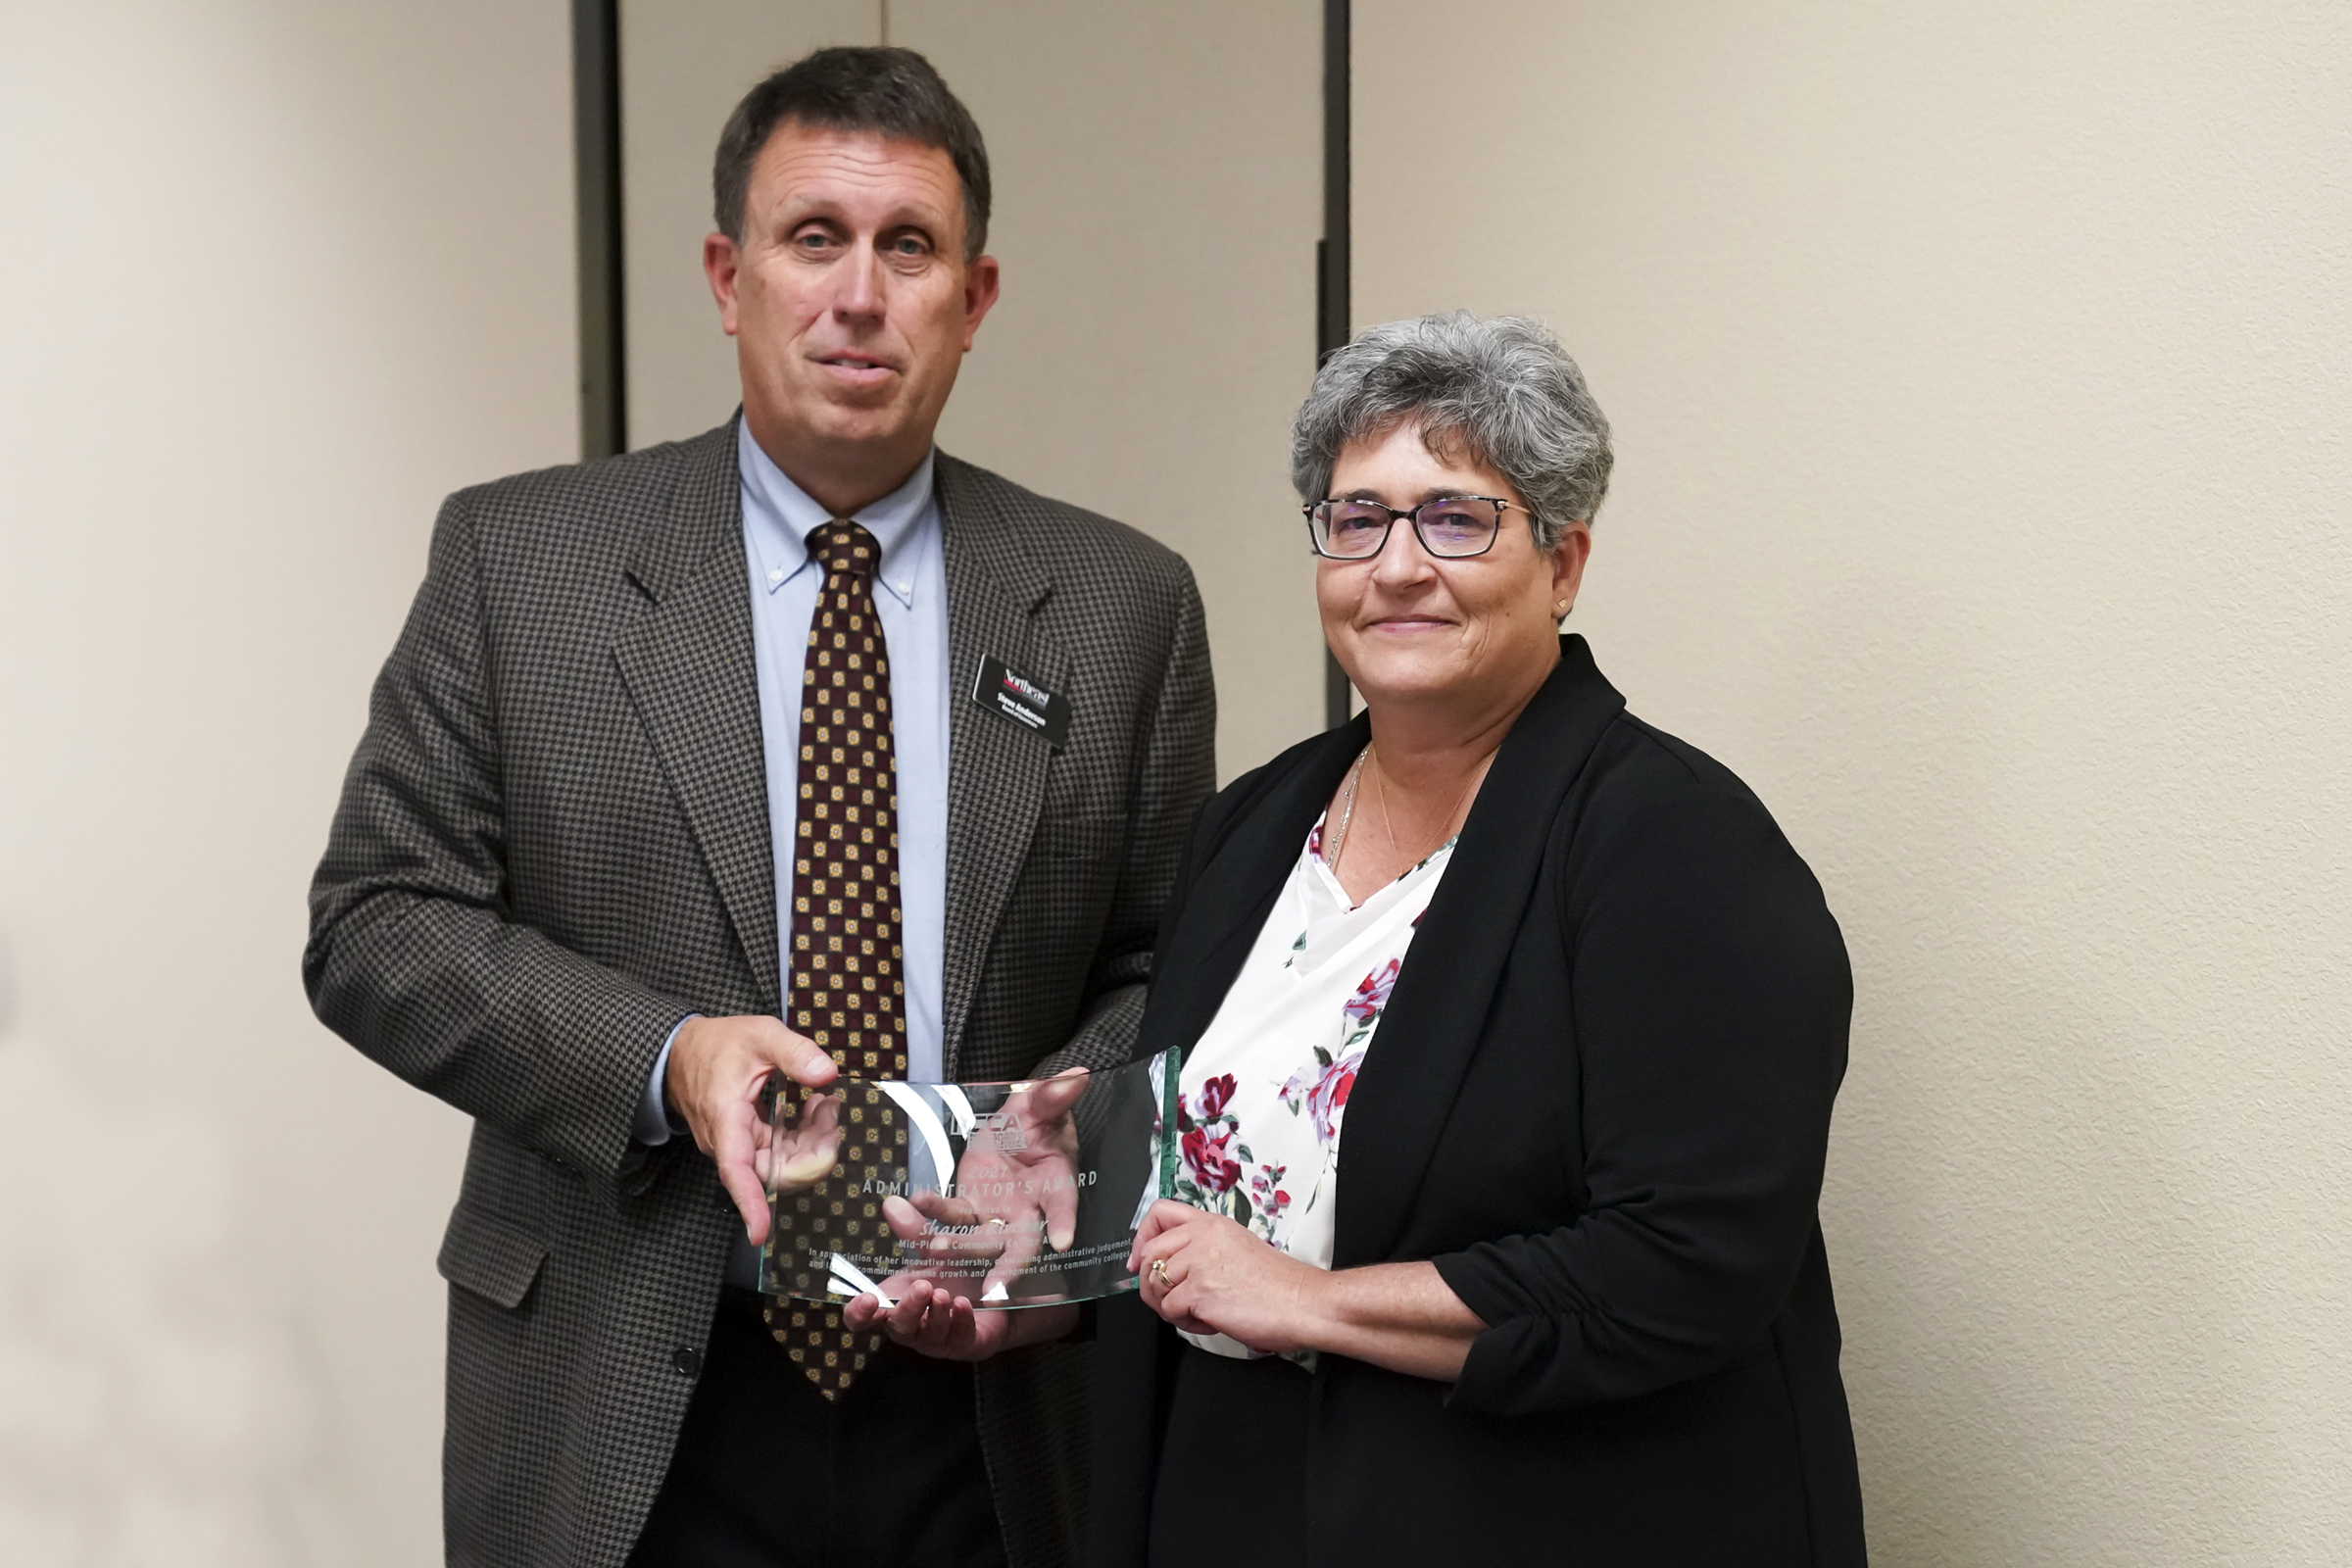 Sharon Kircher Administrator's Award